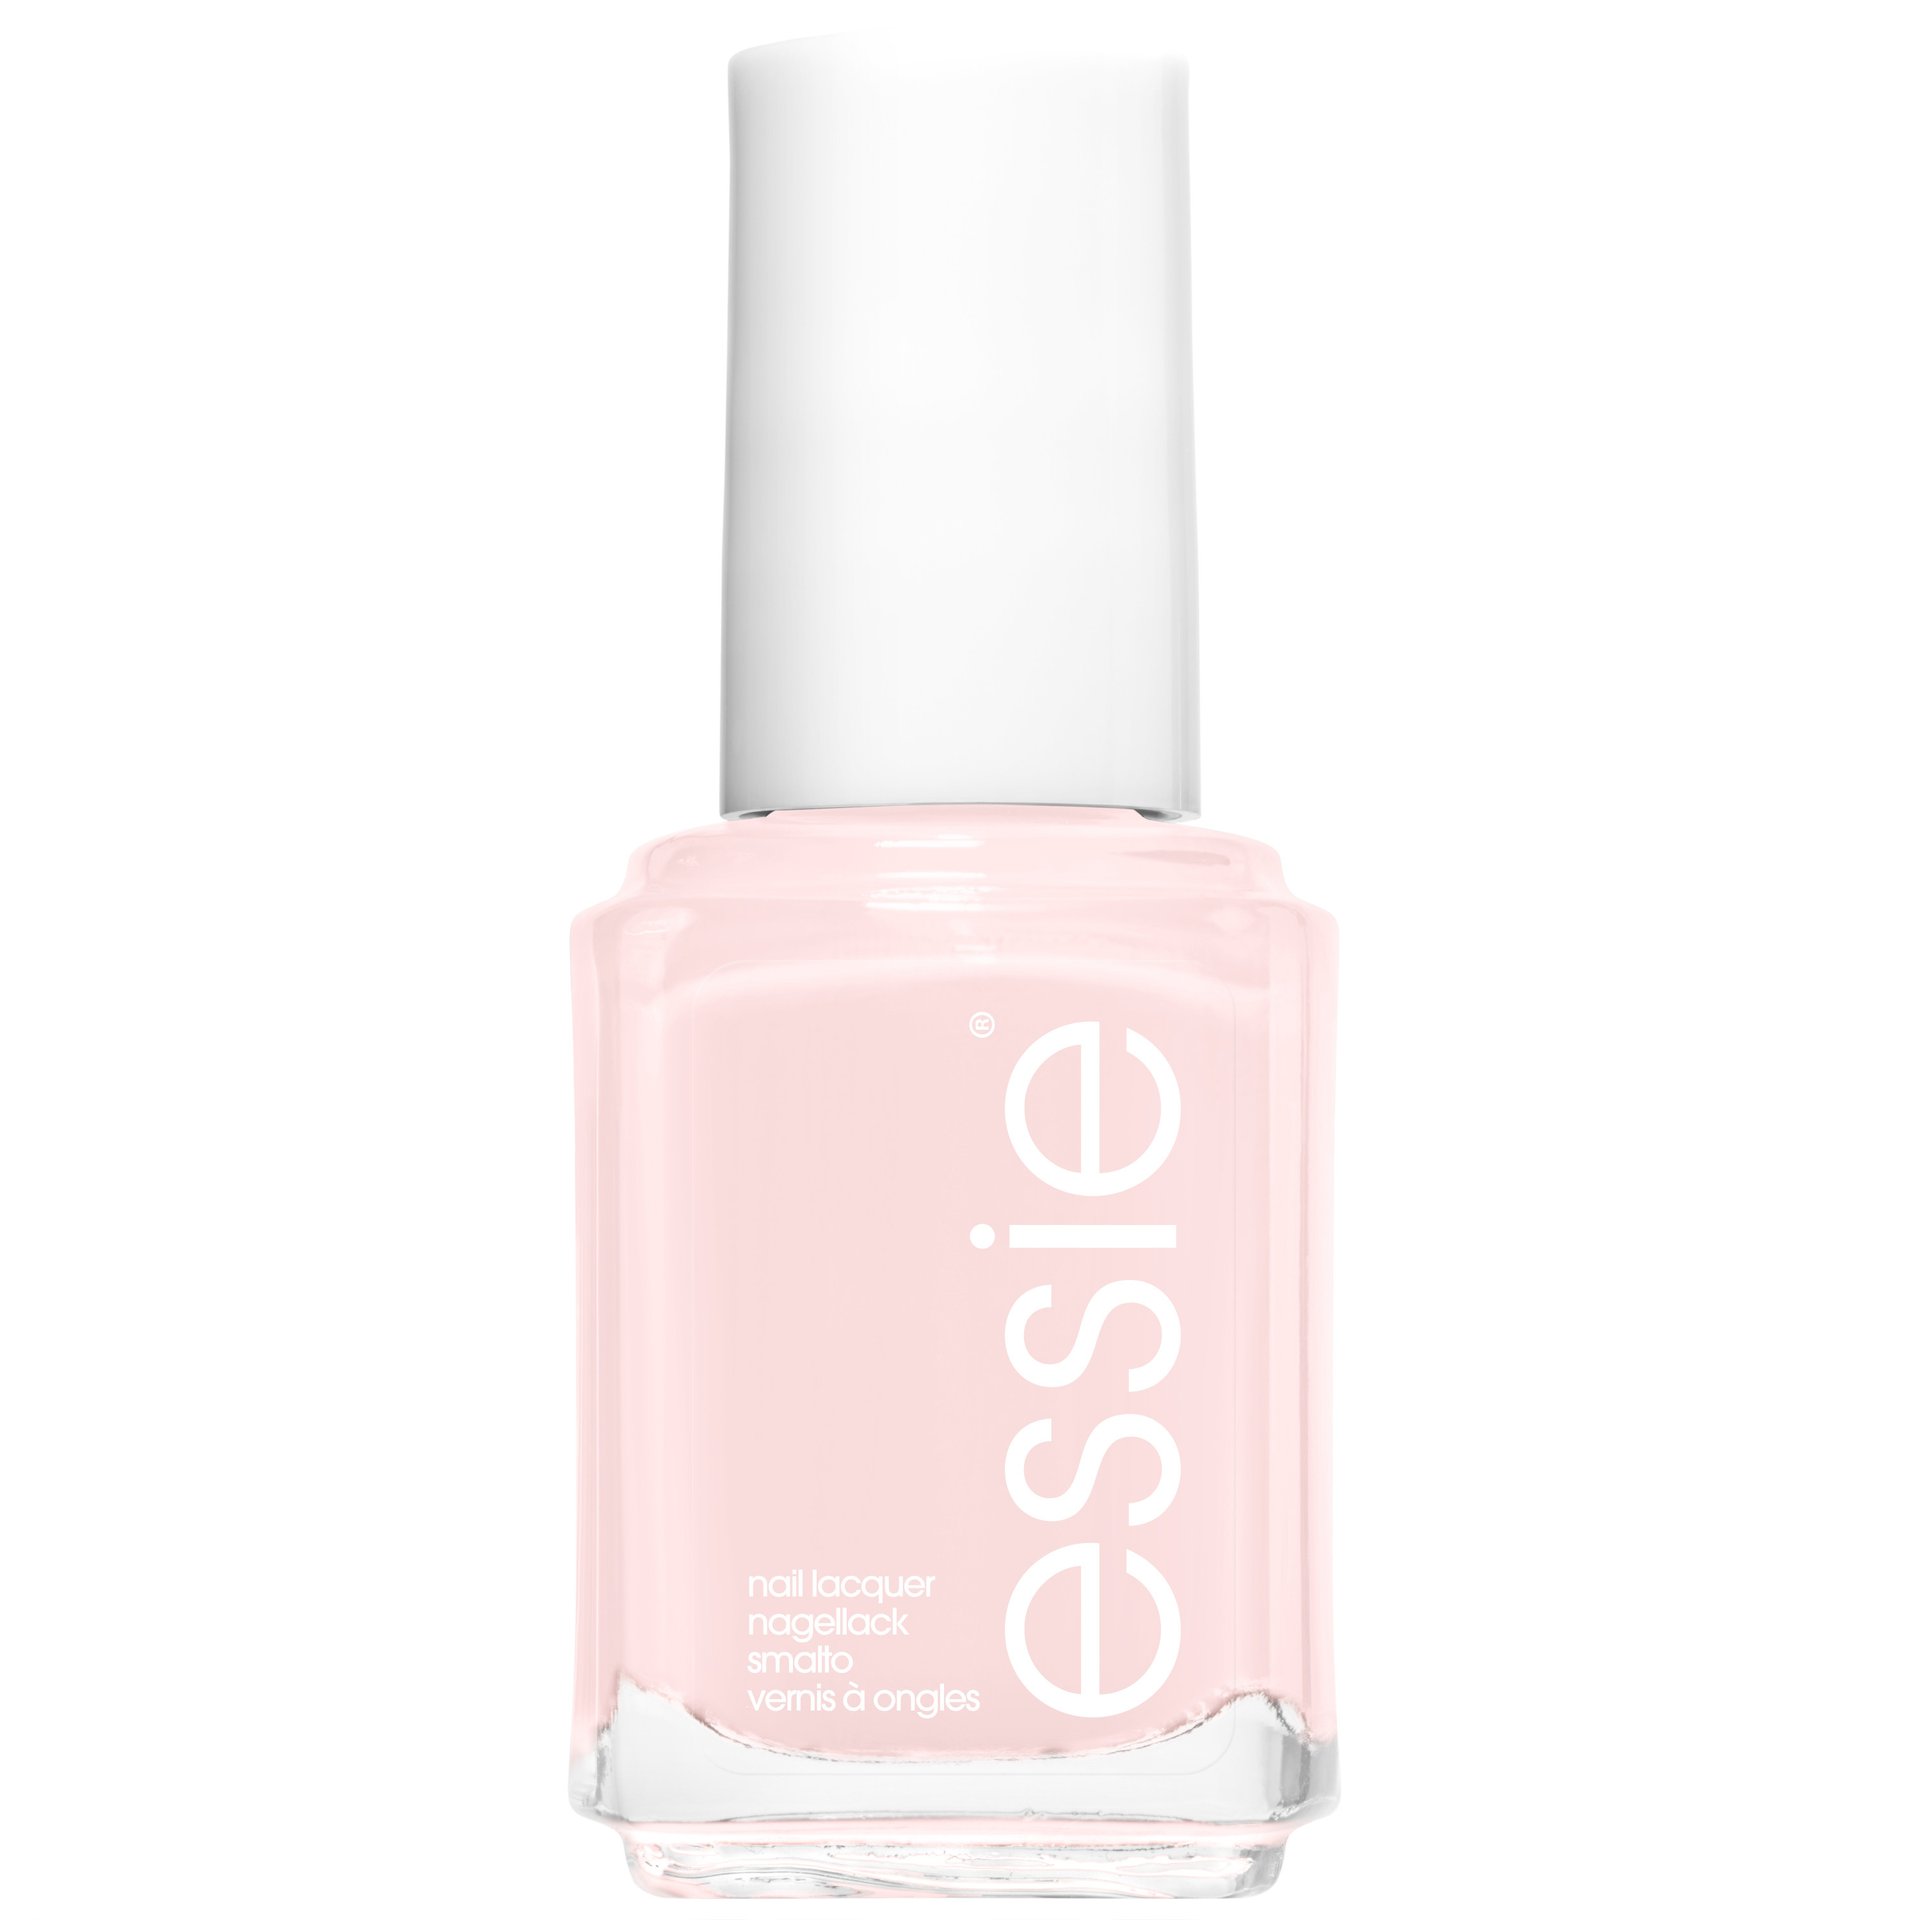 uk pink polish - muchi enamel light - nail muchi, essie